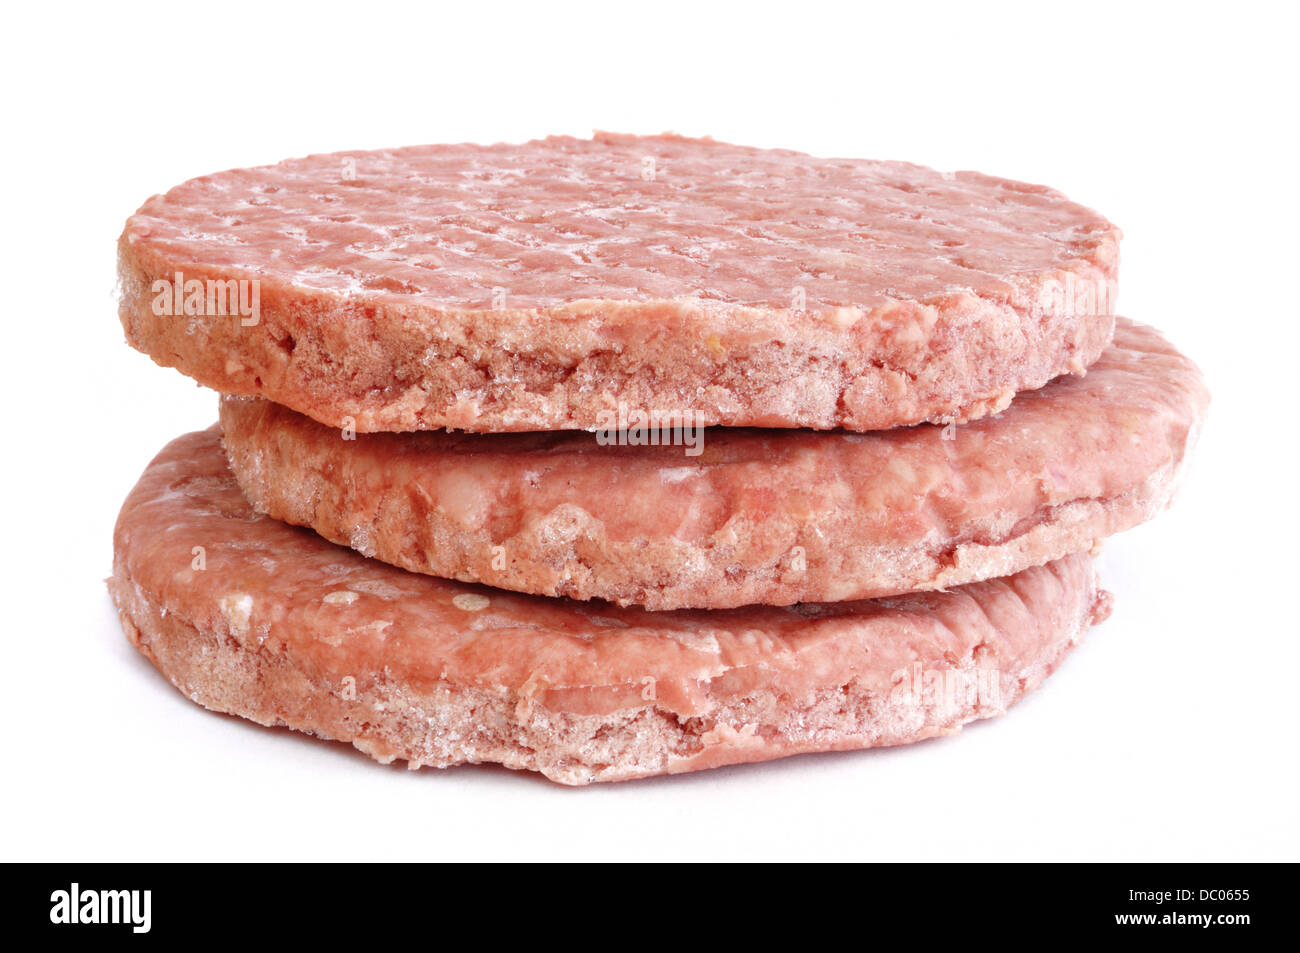 Pile of three frozen burgers Stock Photo